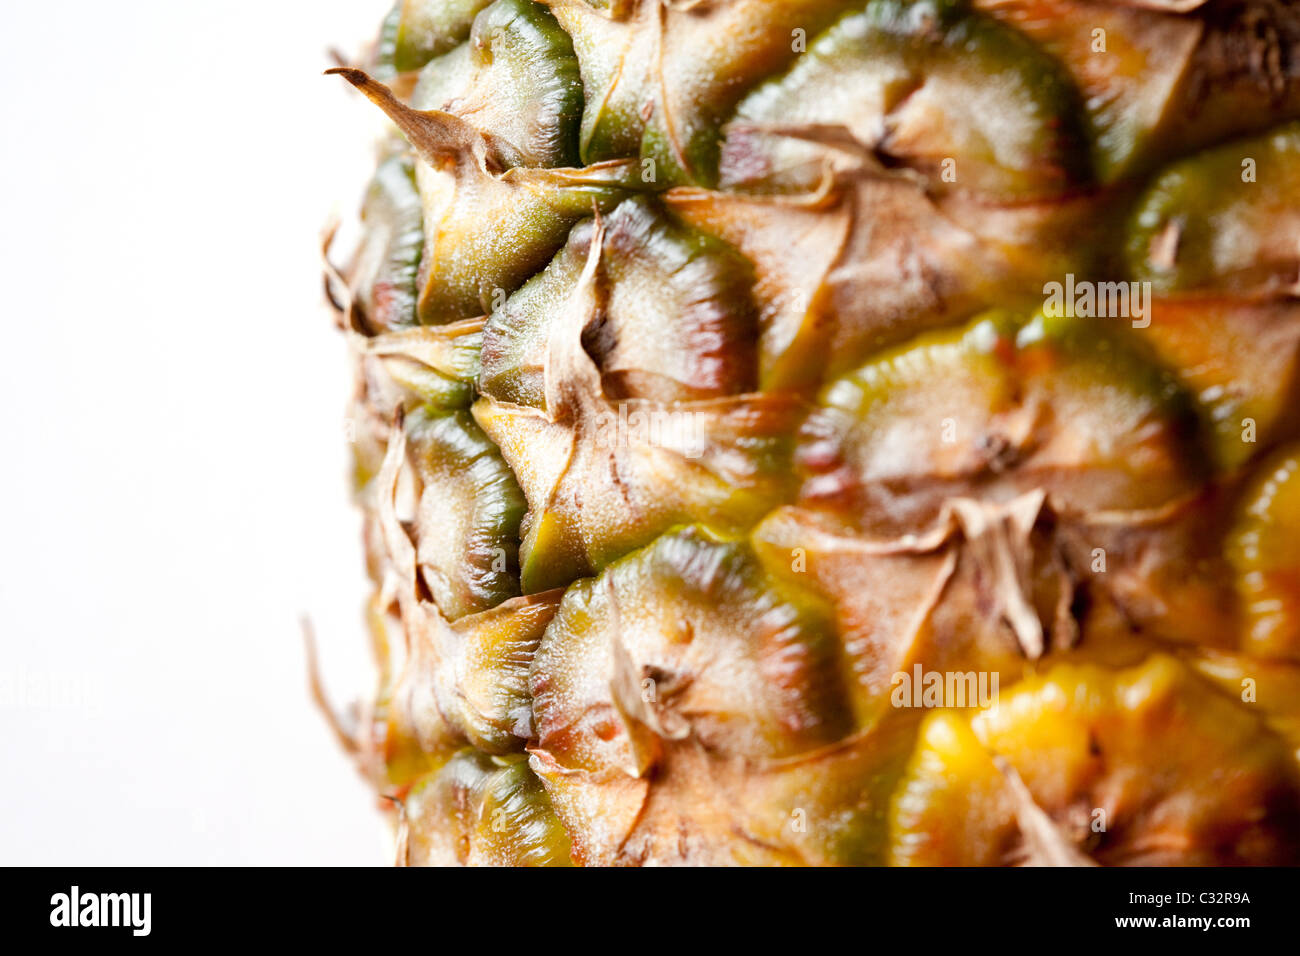 Pineapple, close up Stock Photo